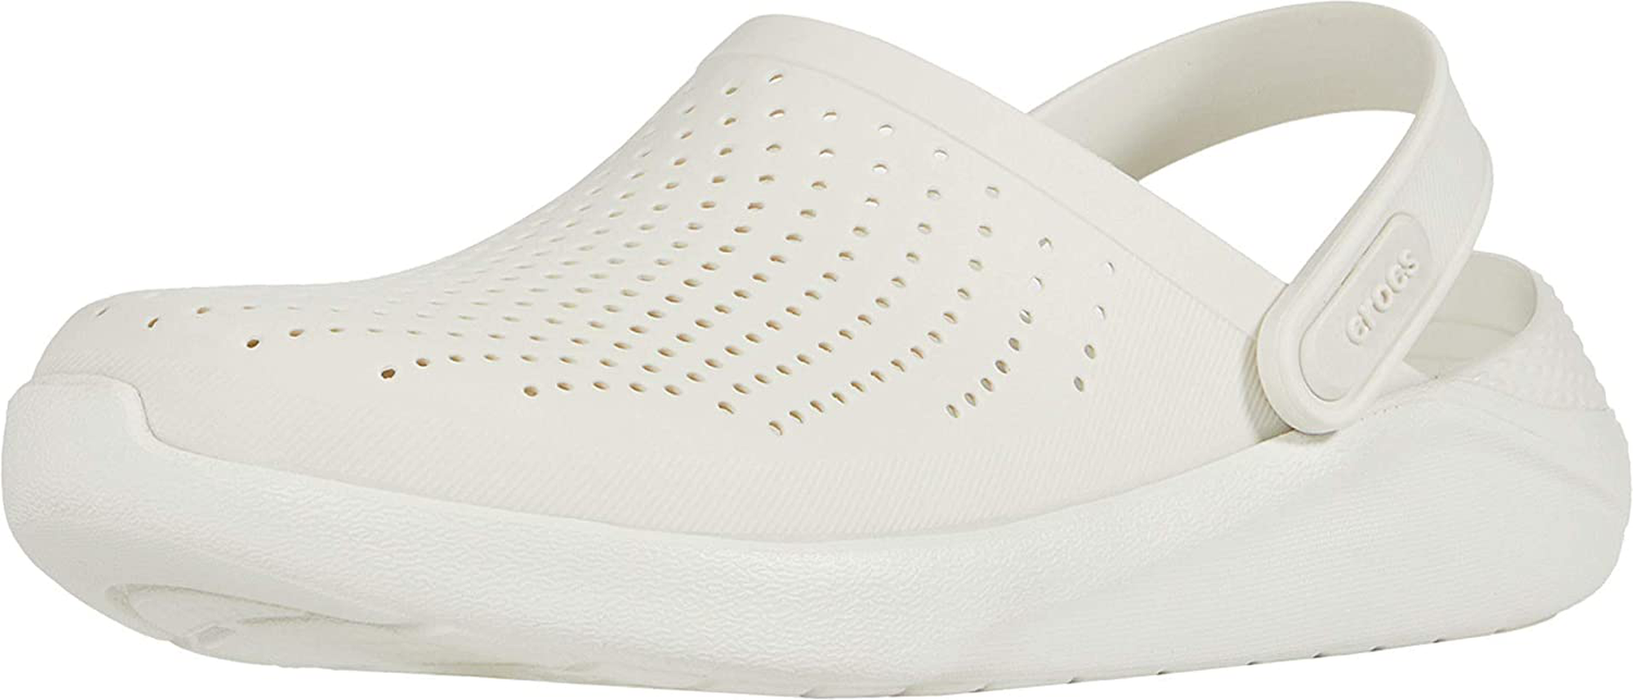 Crocs Unisex-Adult Mens and Womens LiteRide Clog  Athletic Slip On Comfort Shoes